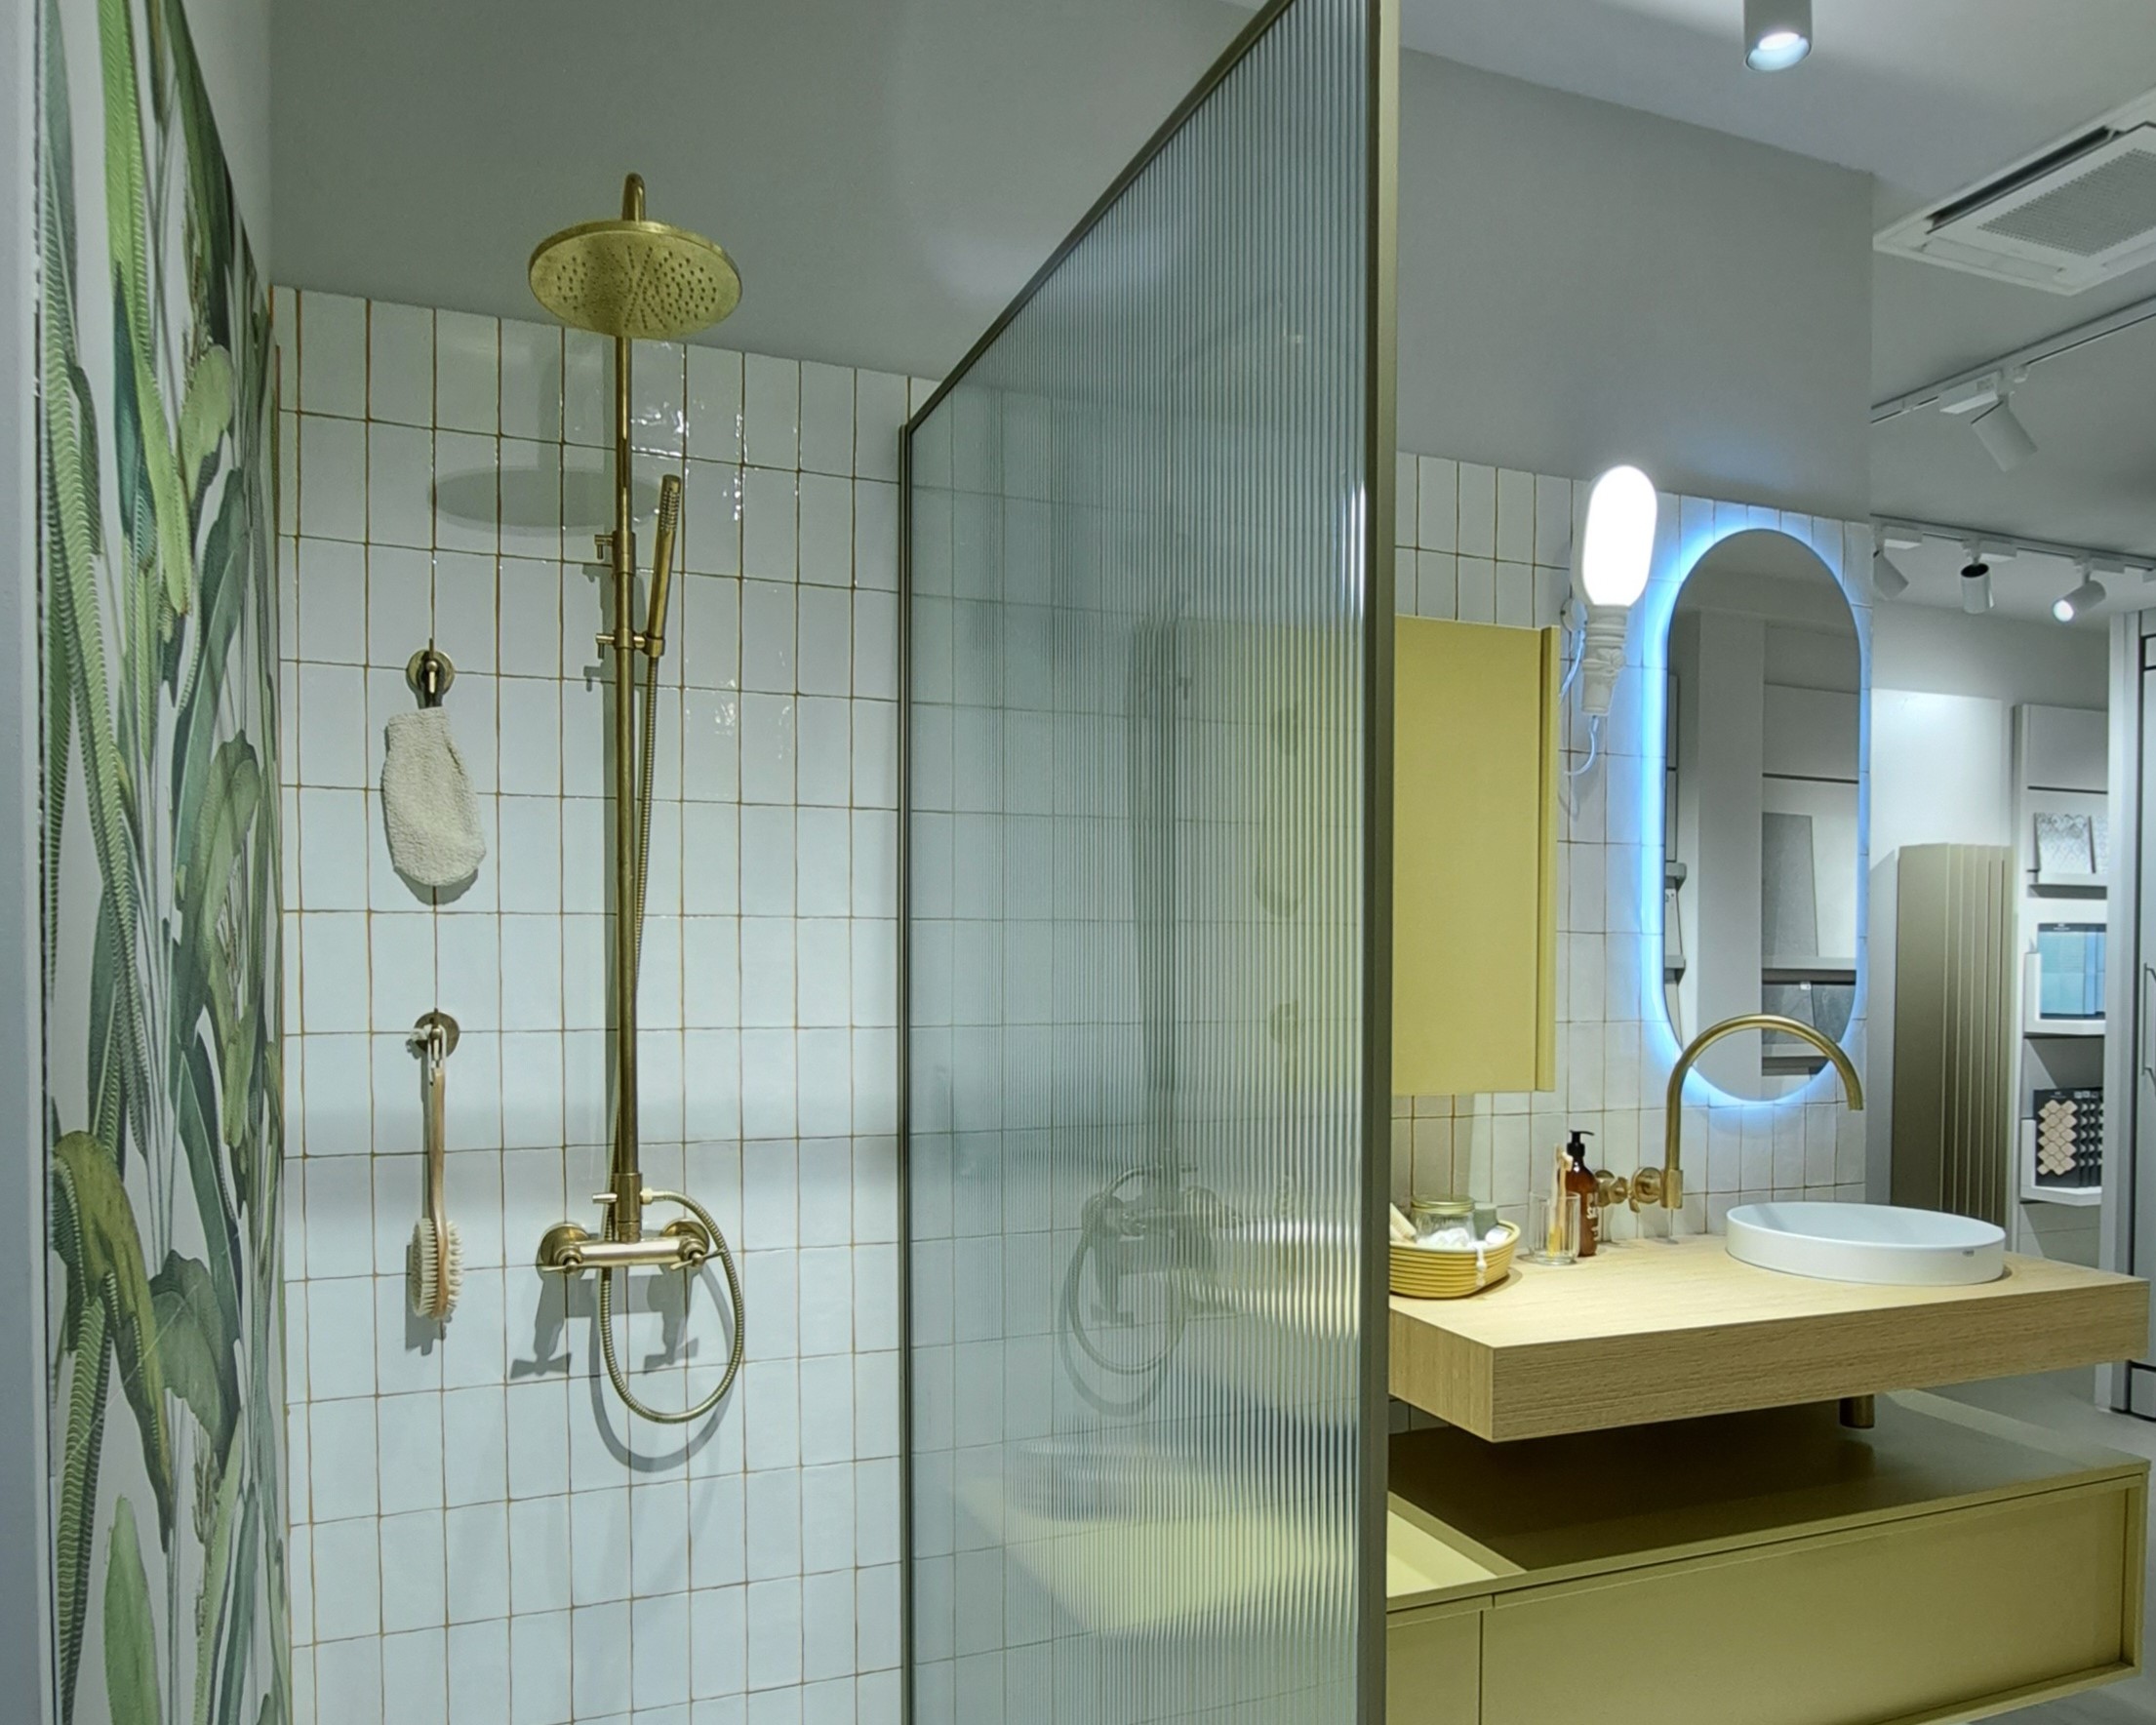 Habimat showroom interni roma colamariani poduti finiture bagni piastrelle arredobagno sanitari infissi porte illuminazione